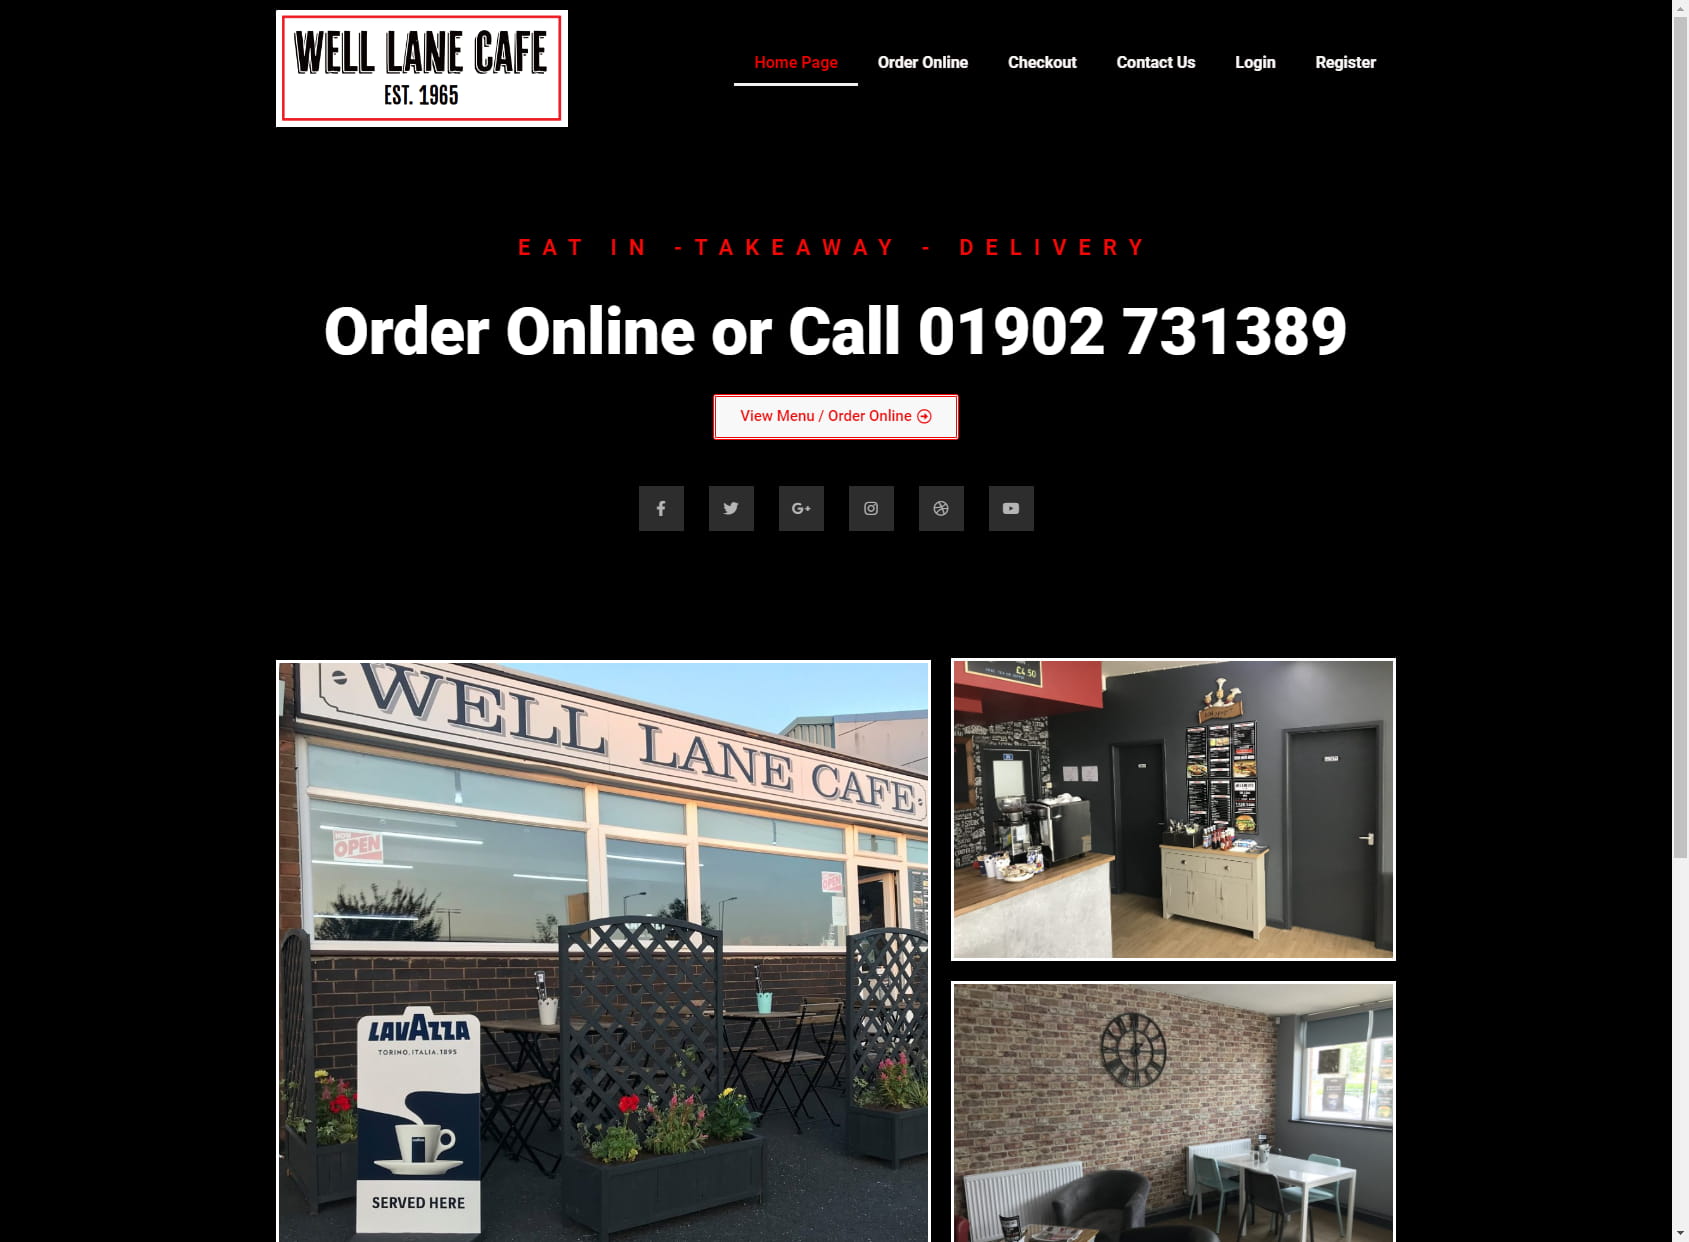 Well Lane Cafe Ltd